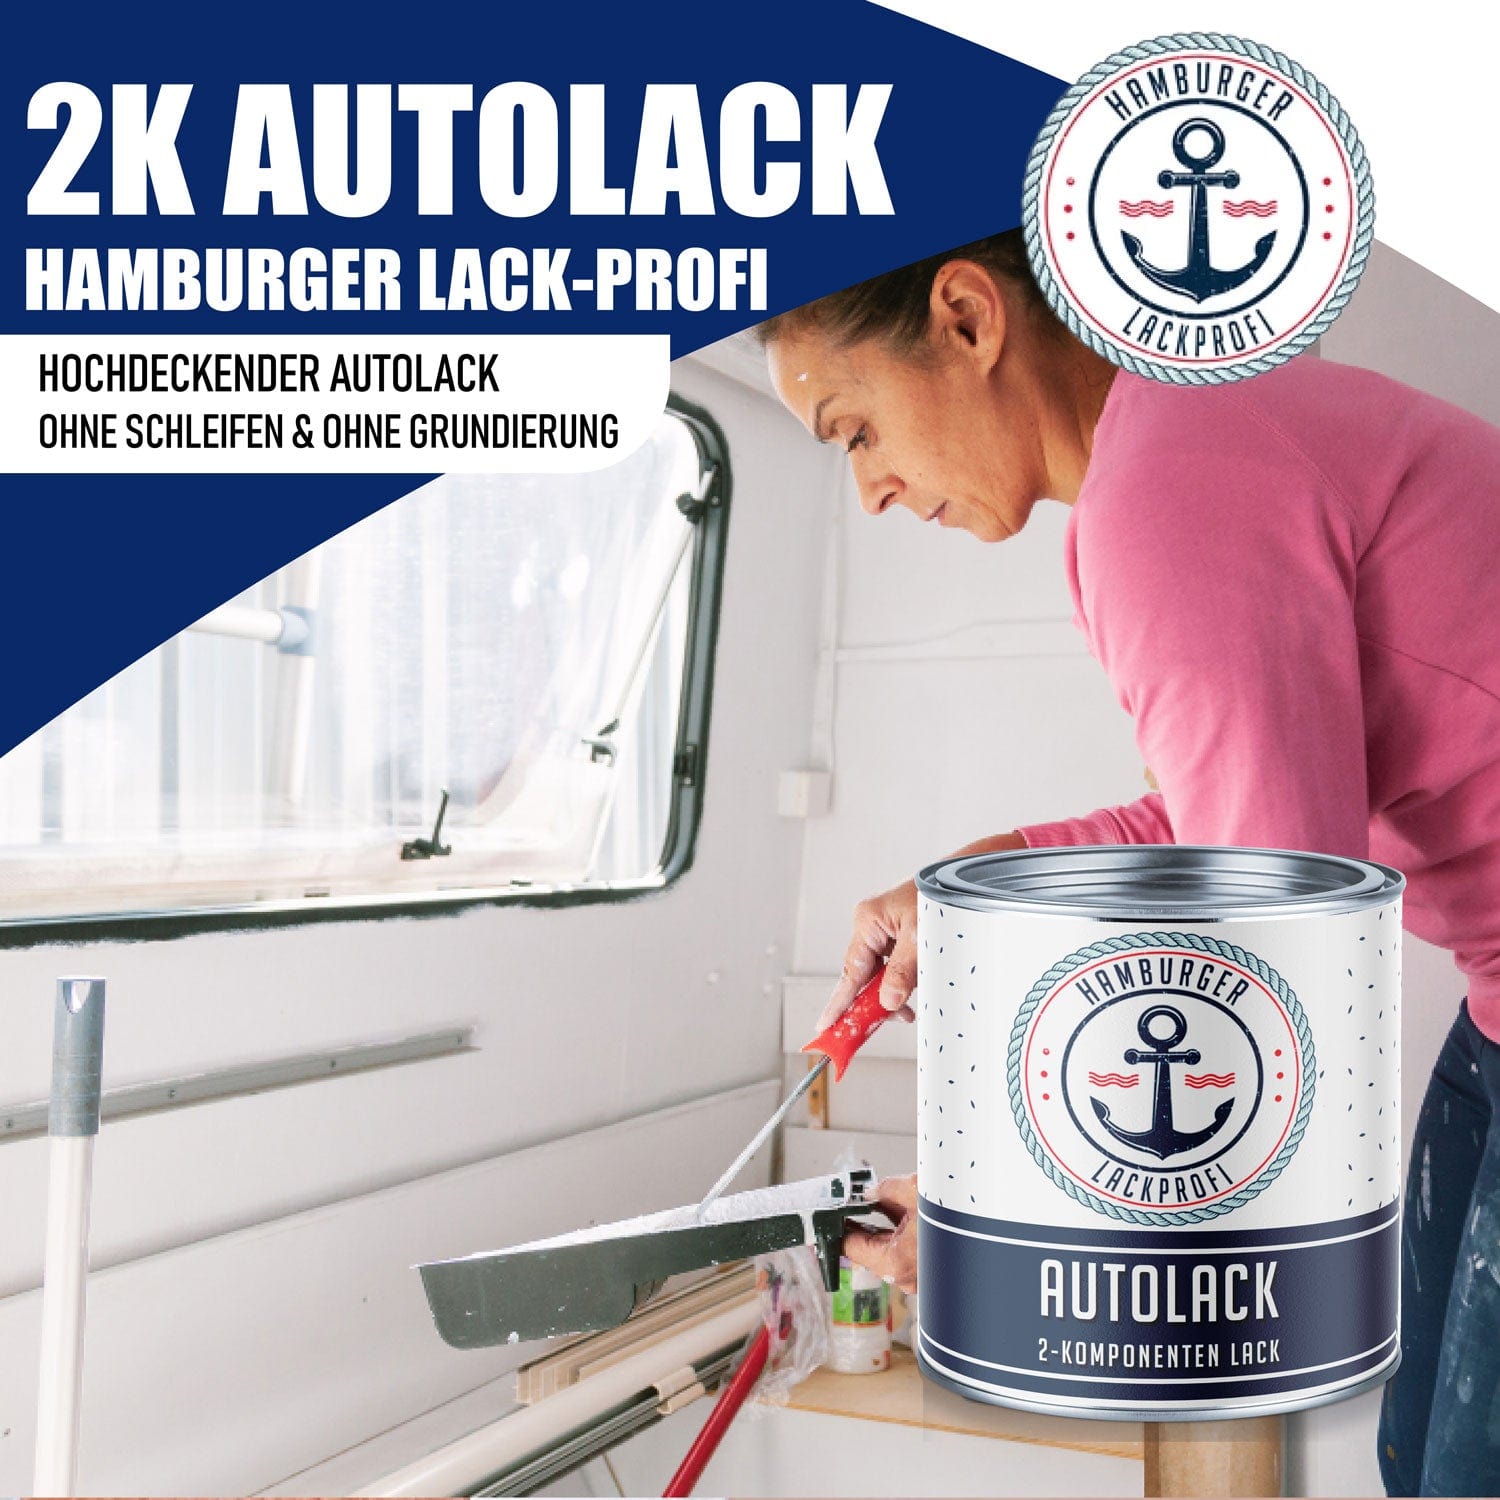 Hamburger Lack-Profi Lacke & Beschichtungen Hamburger Lack-Profi 2K Autolack in Weißaluminium RAL 9006 mit Lackierset (X300) & Verdünnung (1 L) - 30% Sparangebot